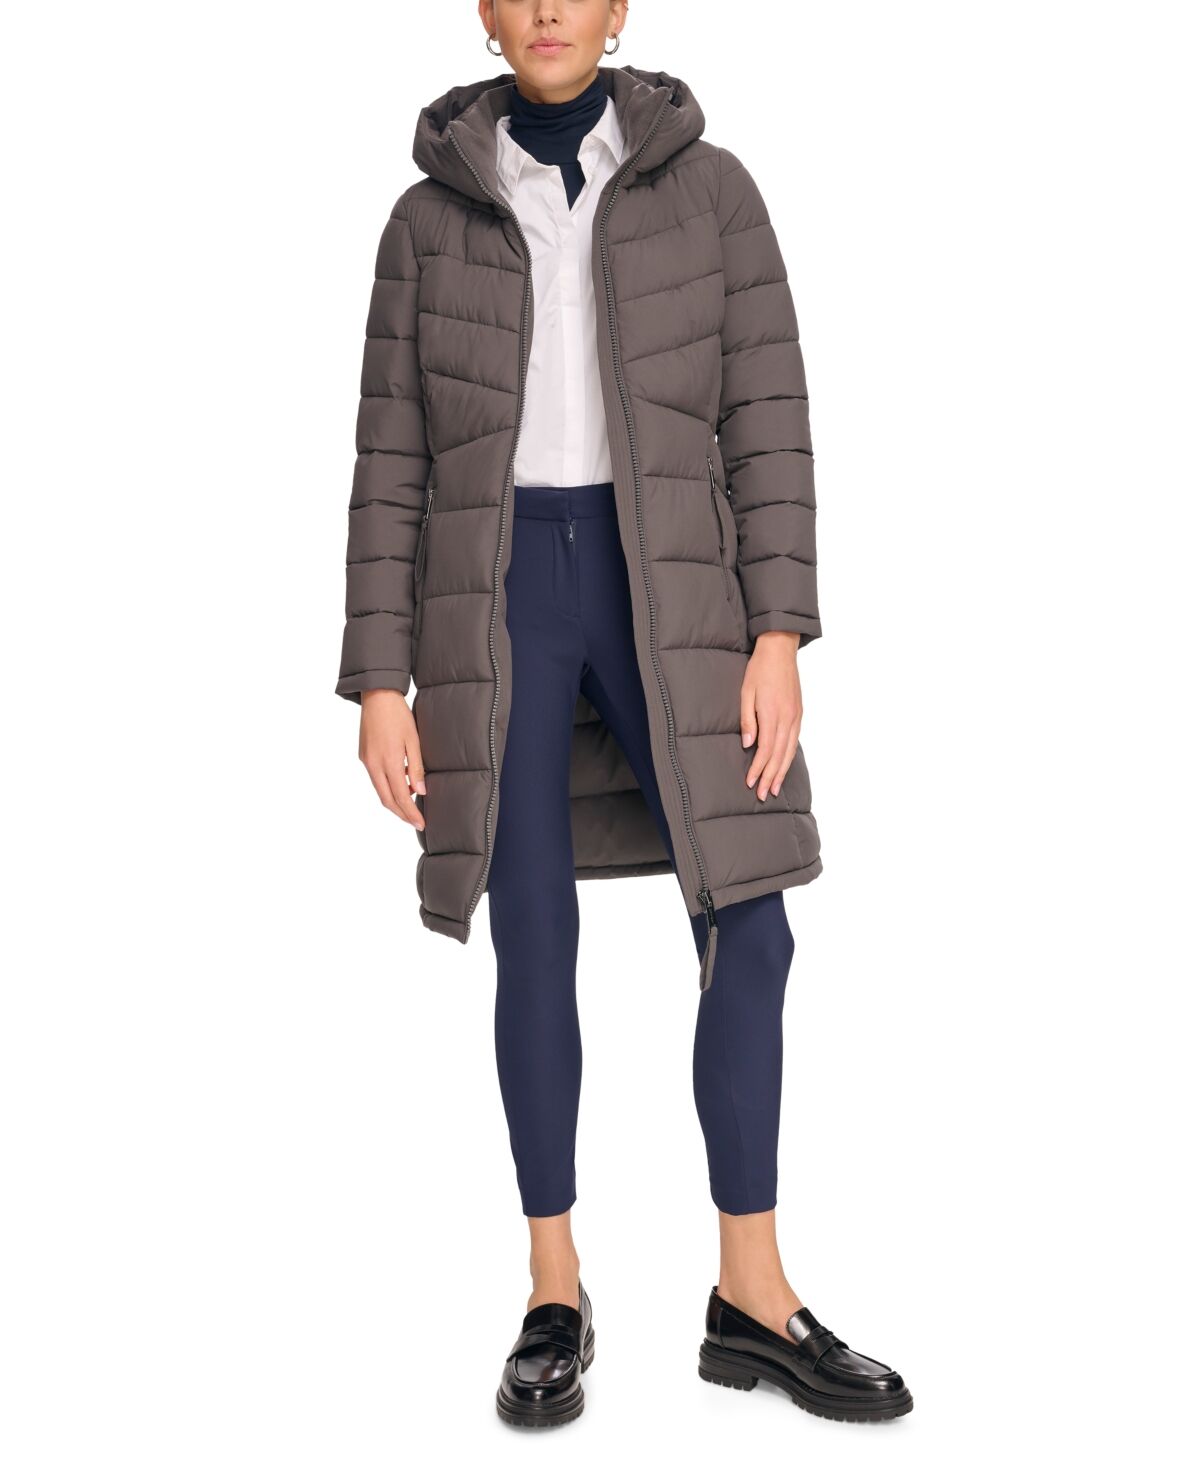 Calvin Klein Women's Hooded Stretch Puffer Coat, Created for Macy's - Titanium